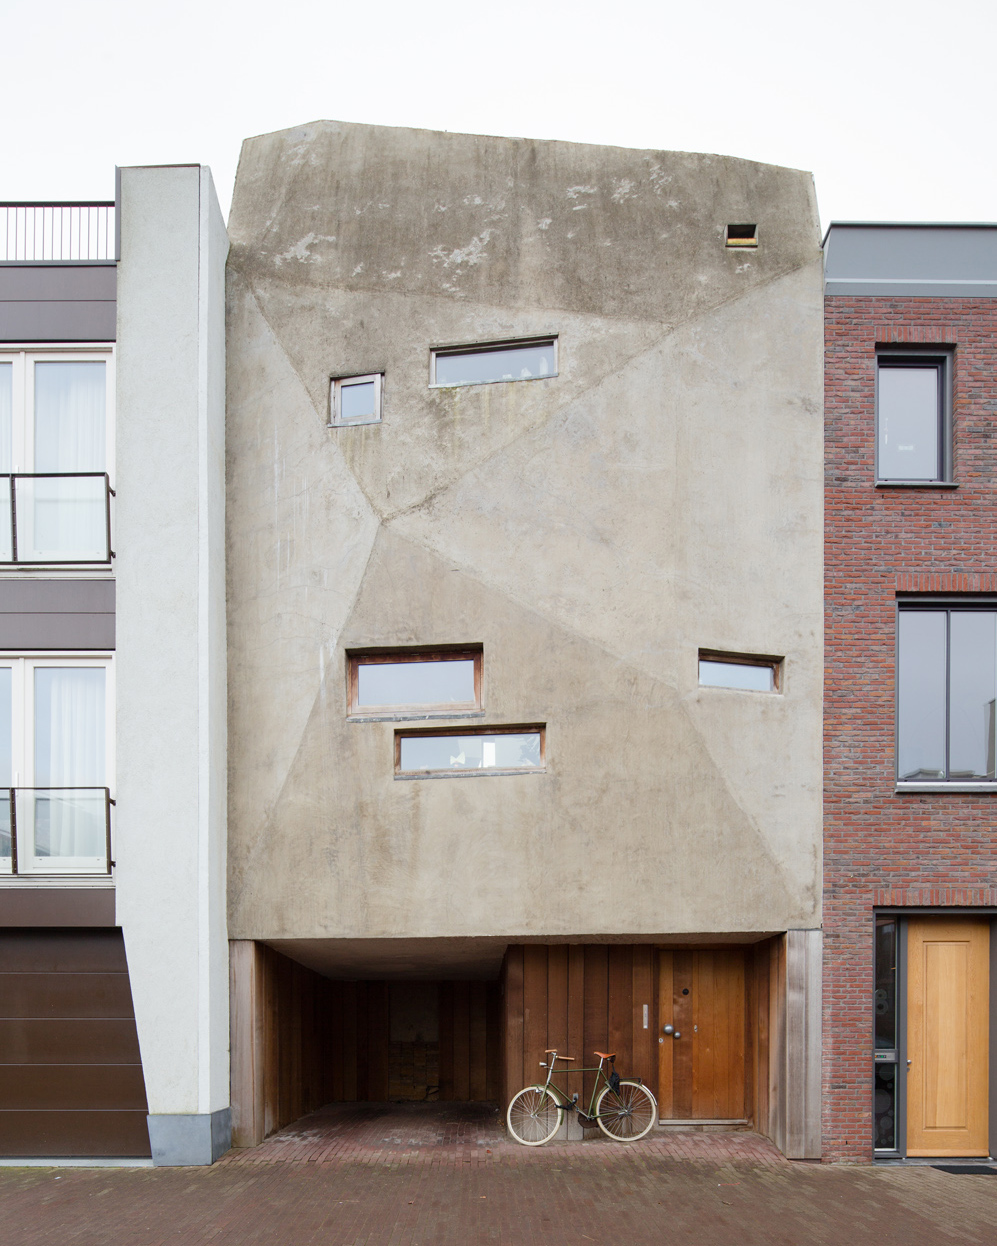  architect:  House of Bouw  location: Amsterdam, The Netherlands 